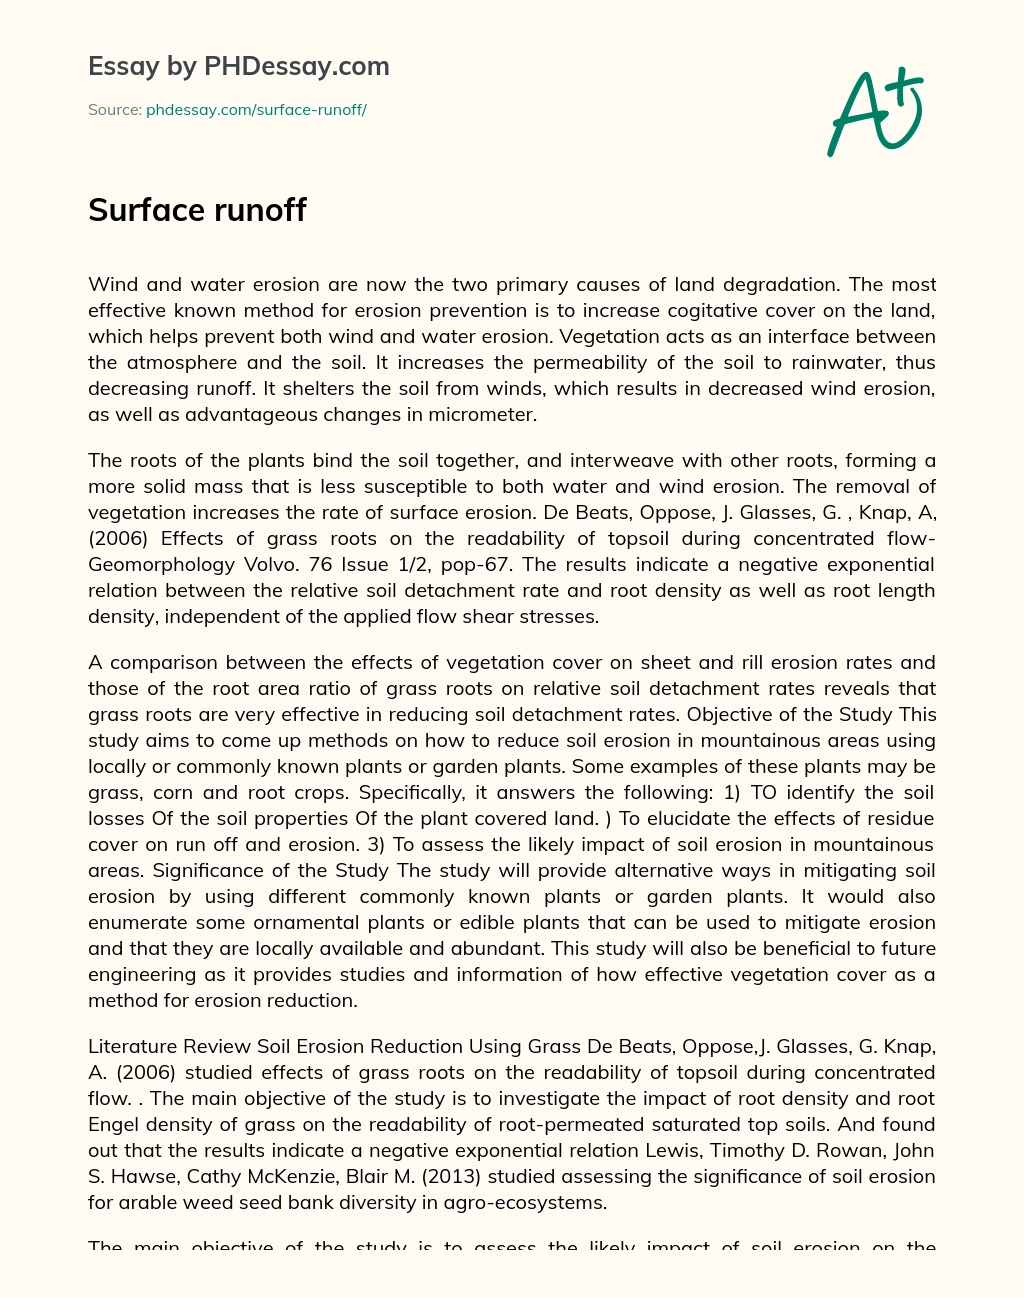 Surface runoff essay